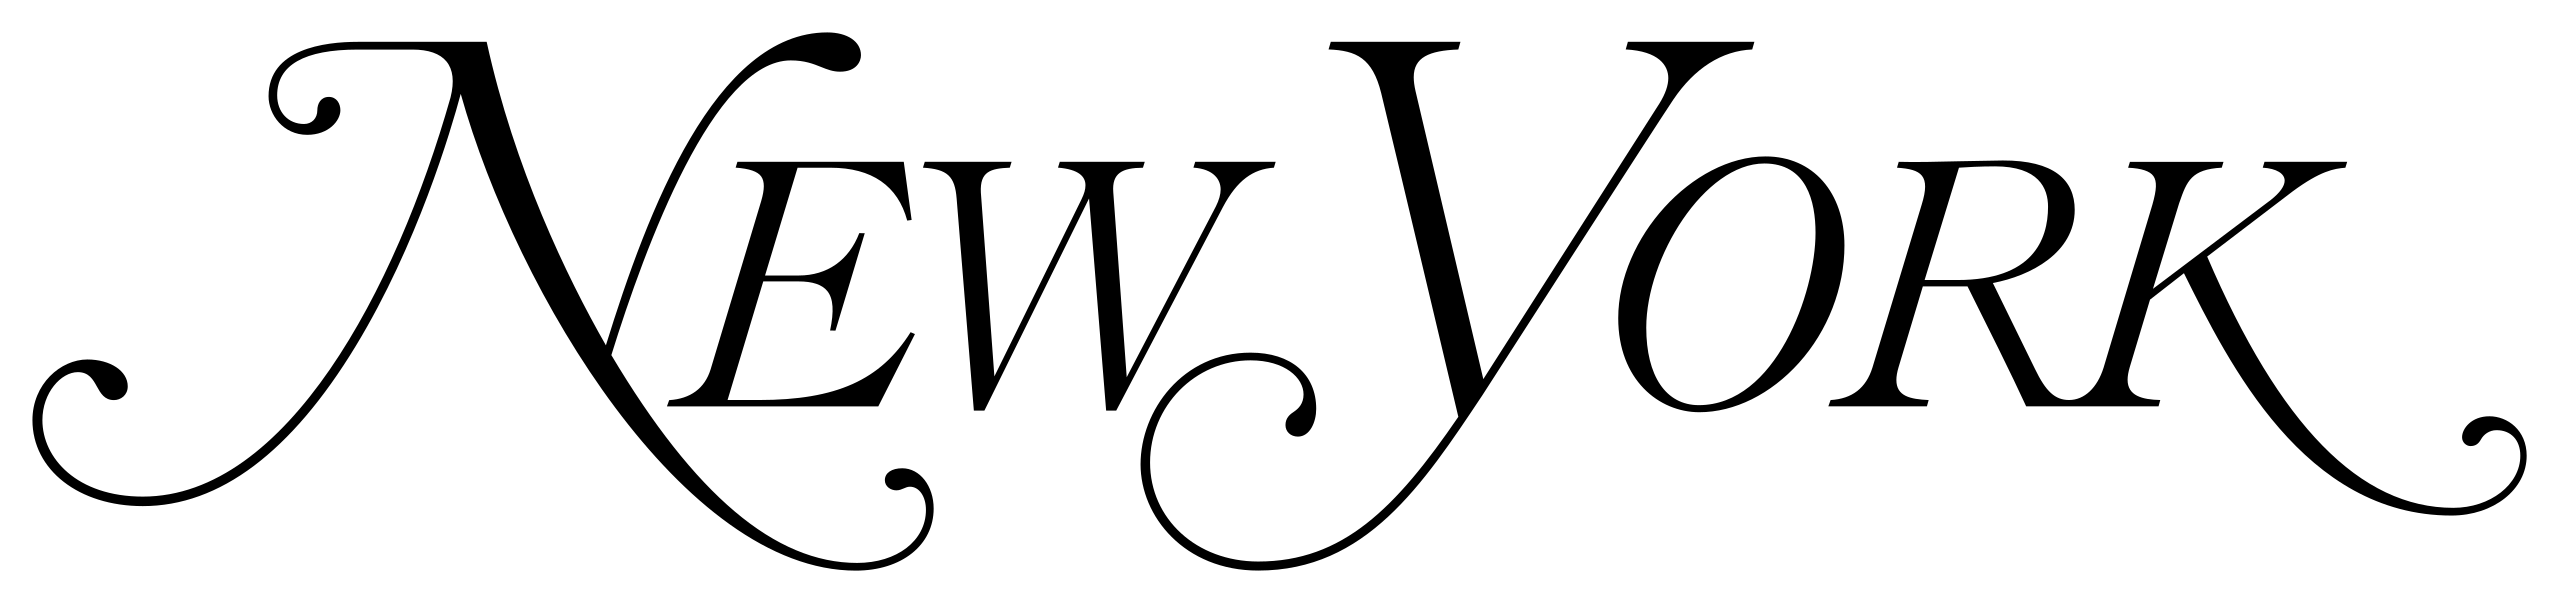 The logo of New York Magazine